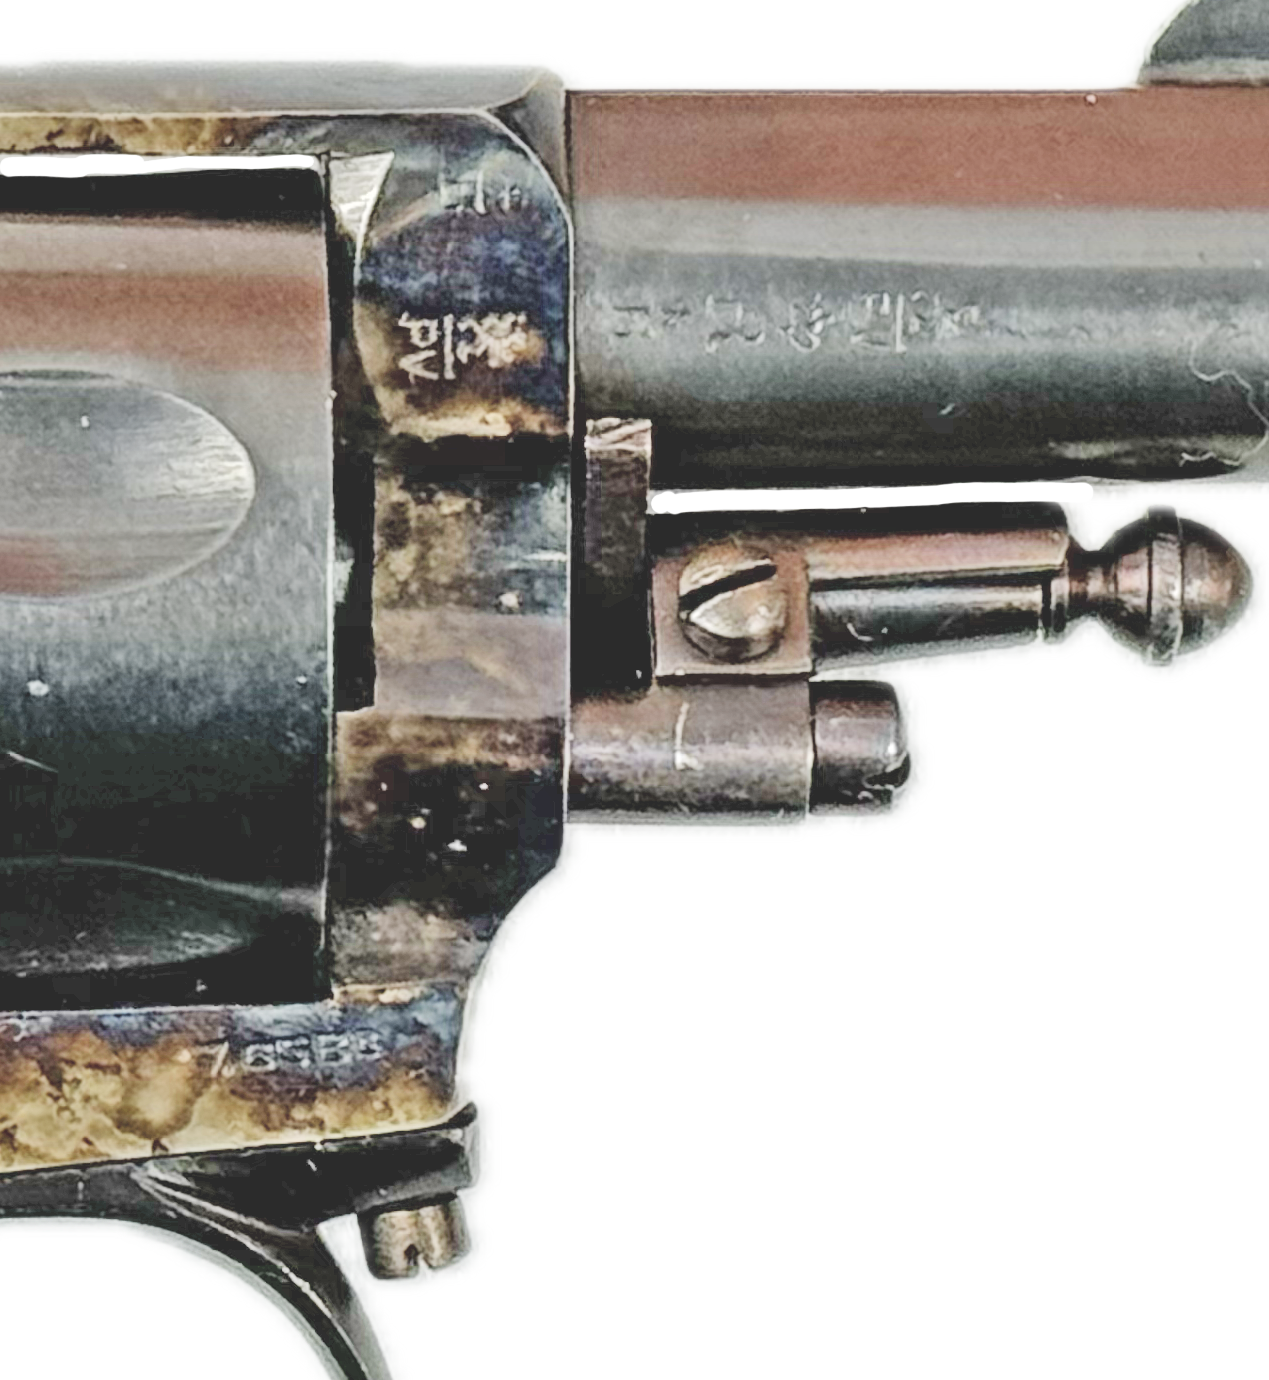 204463_bulldog-revolver-typ-browning-7,65mm-browning-4